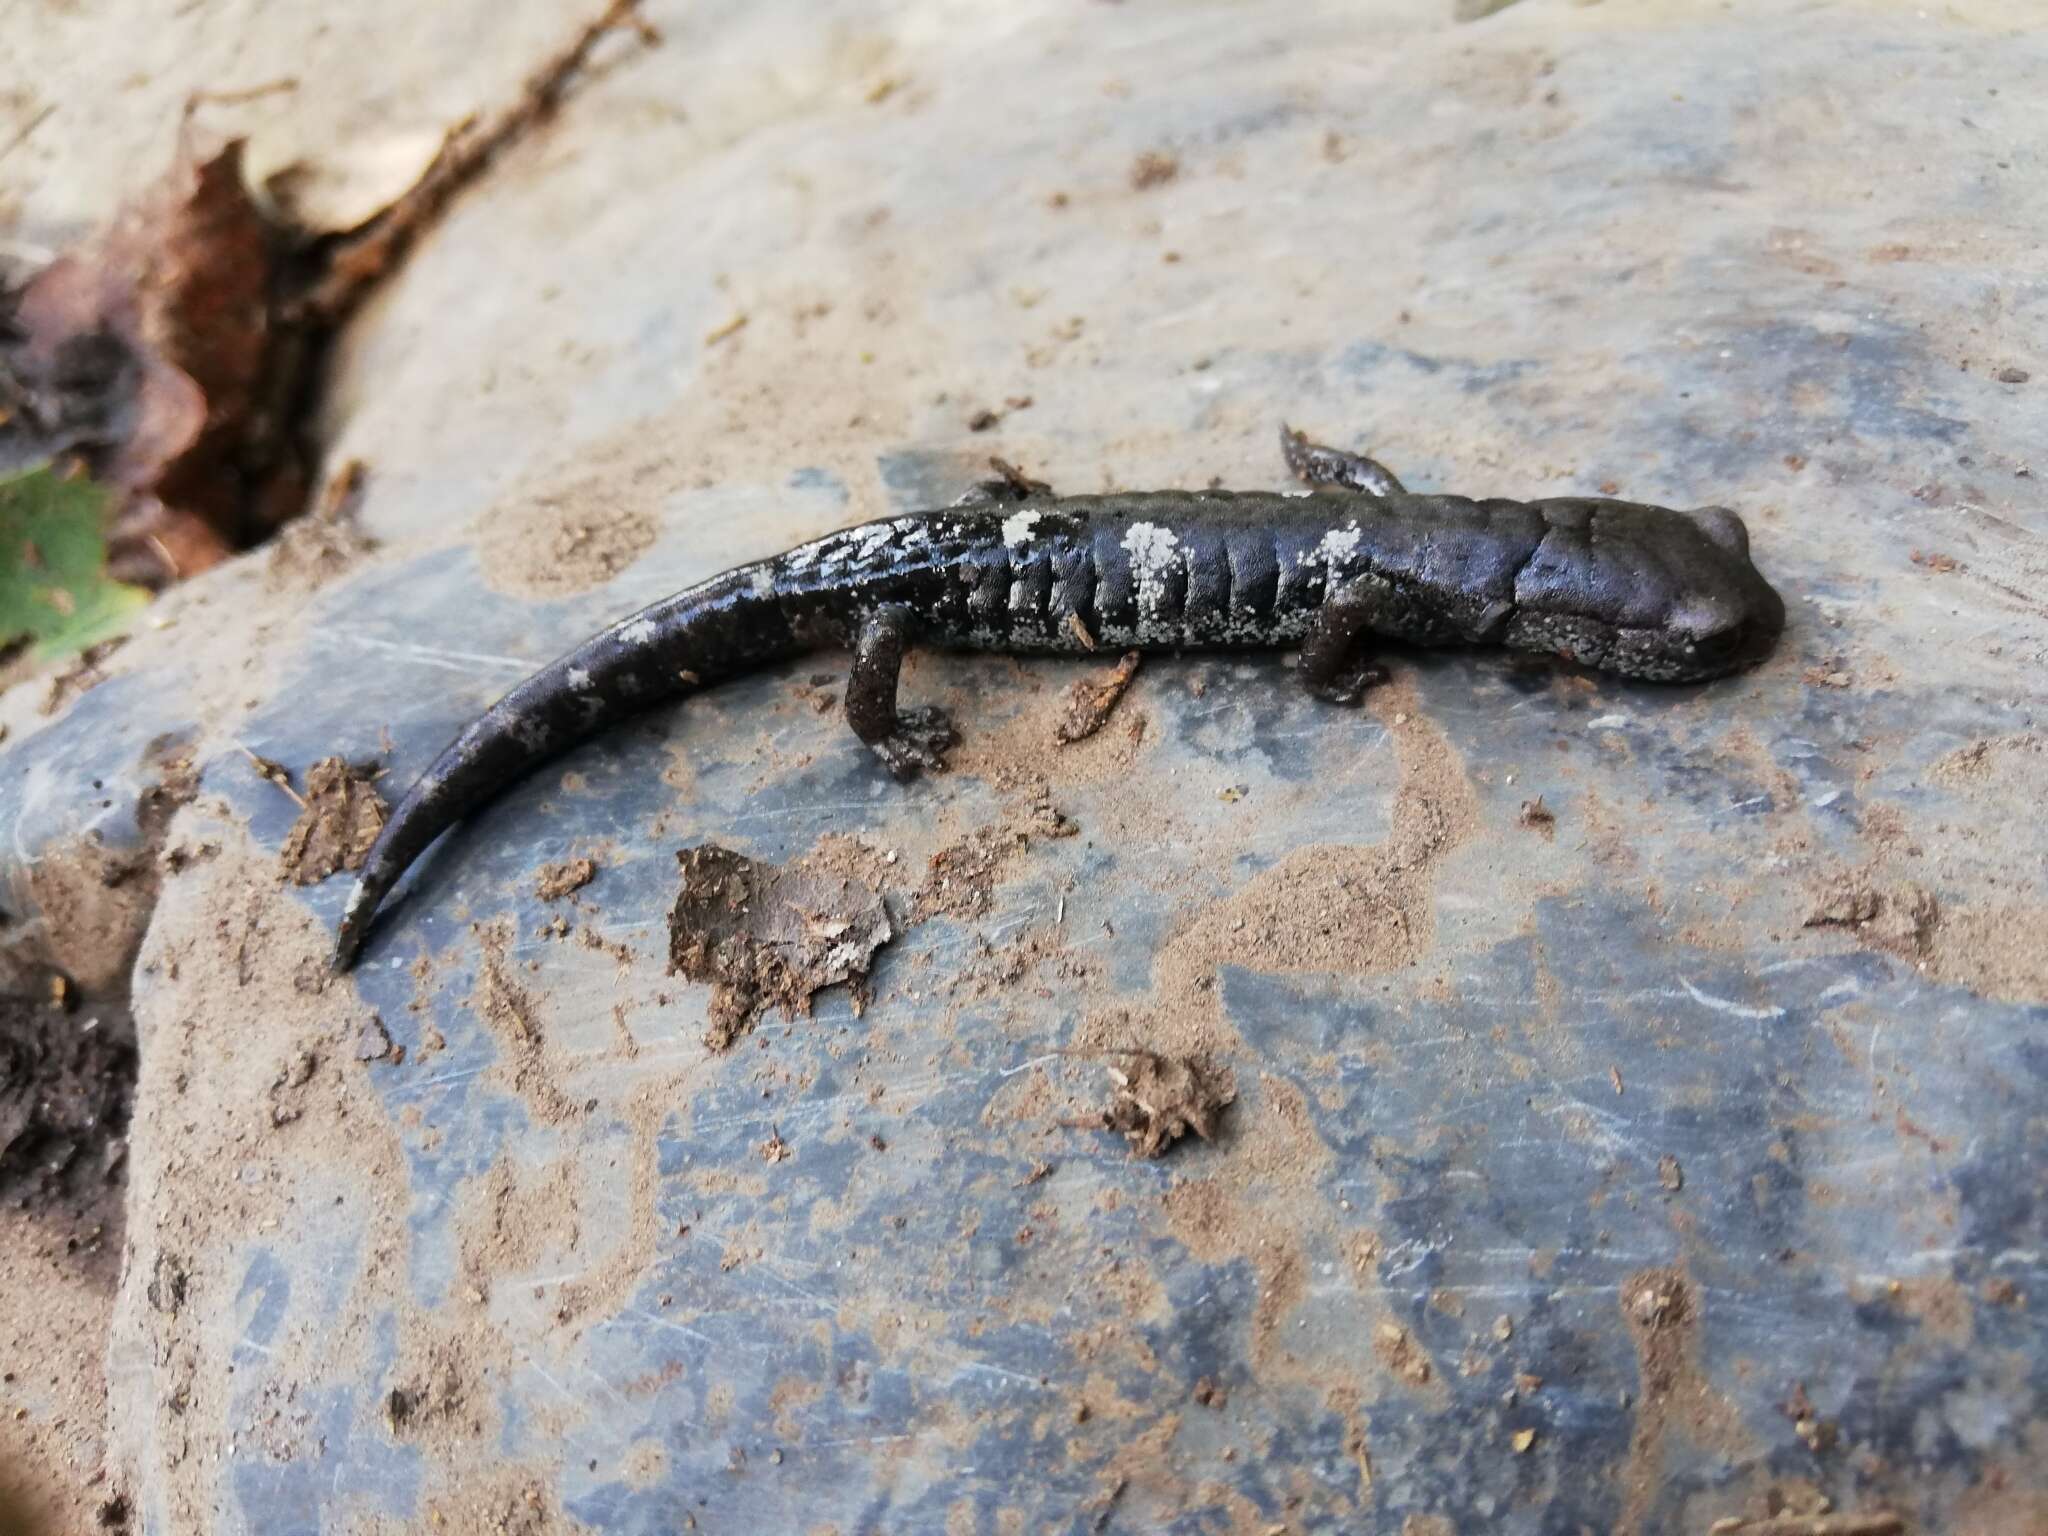 Image of Tamaulipan False Brook Salamander